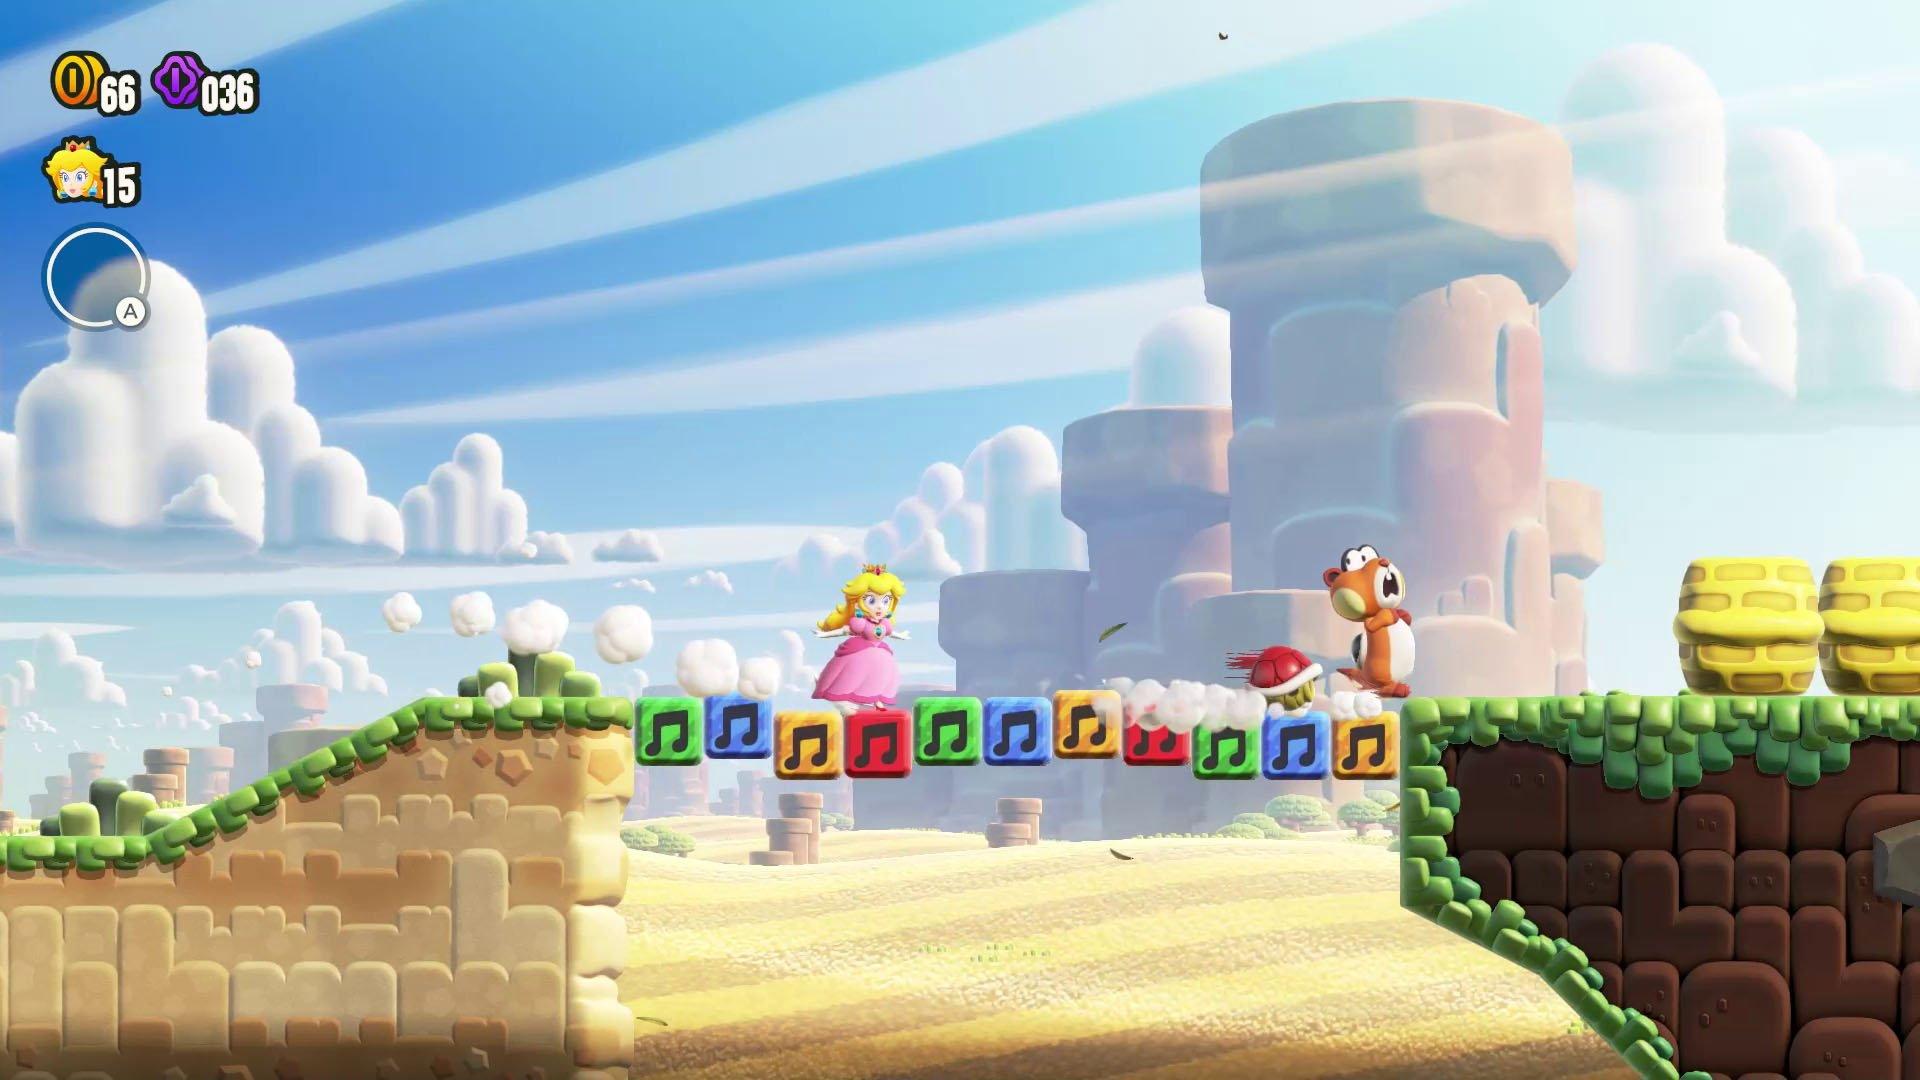 Super Mario Bros. Wonder: Pricing, Availability, Pre-order Online.